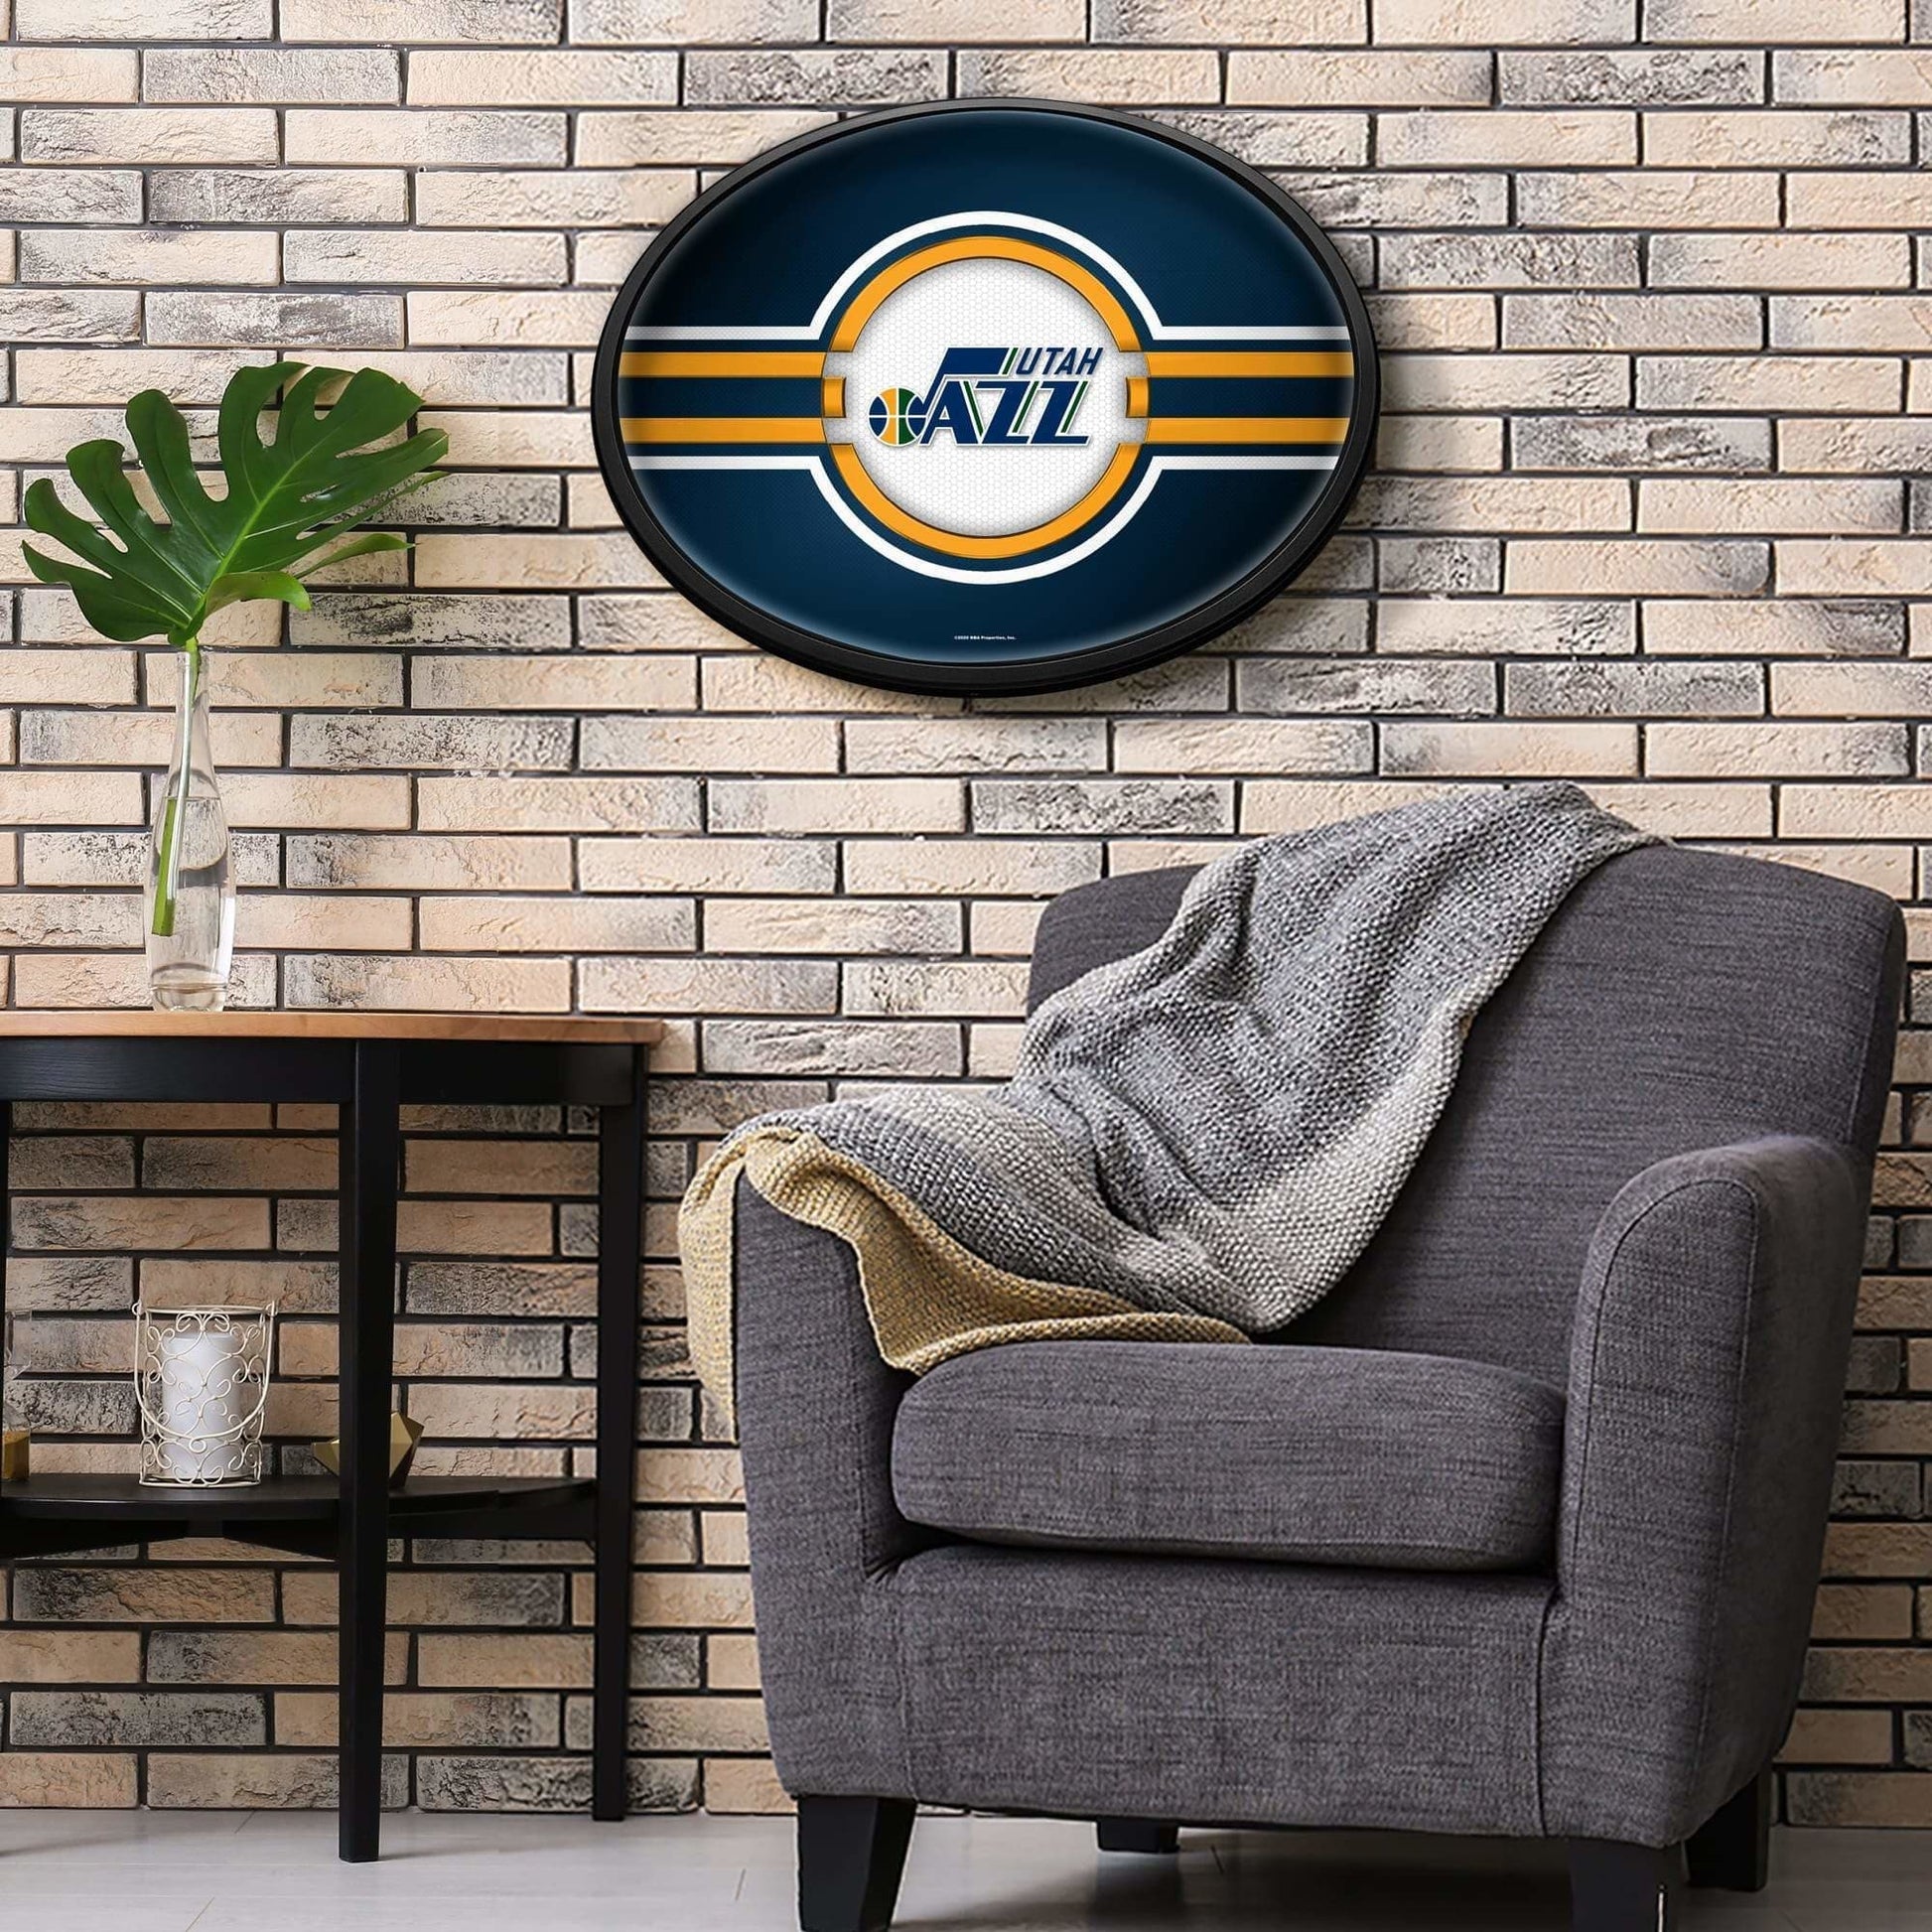 Utah Jazz: Oval Slimline Lighted Wall Sign - The Fan-Brand